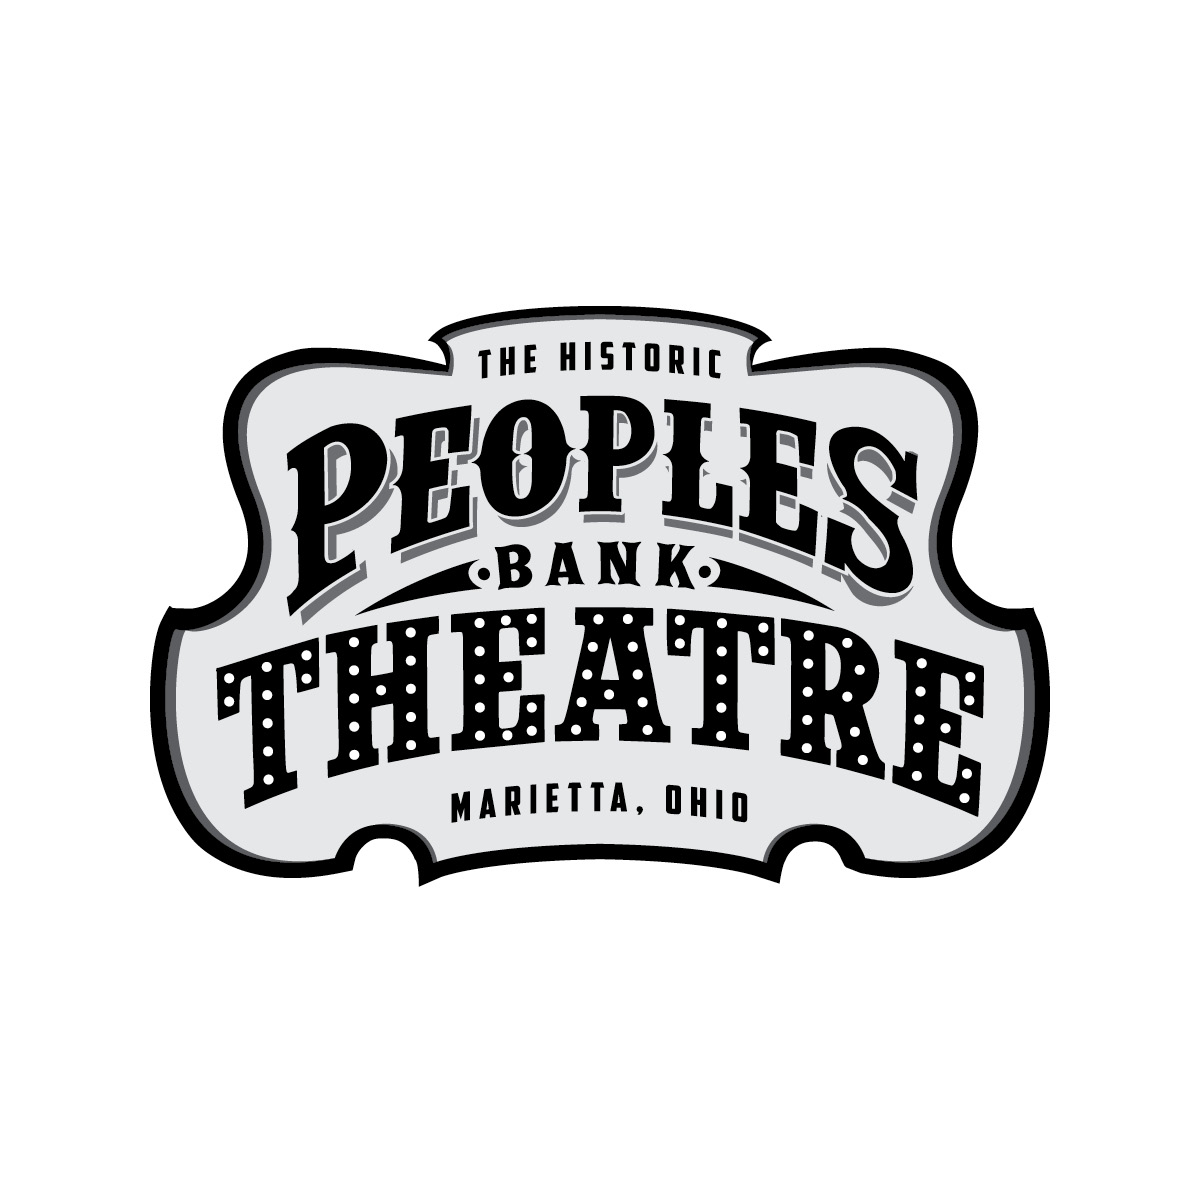 The Historic Peoples Bank Theatre - Marietta, Ohio